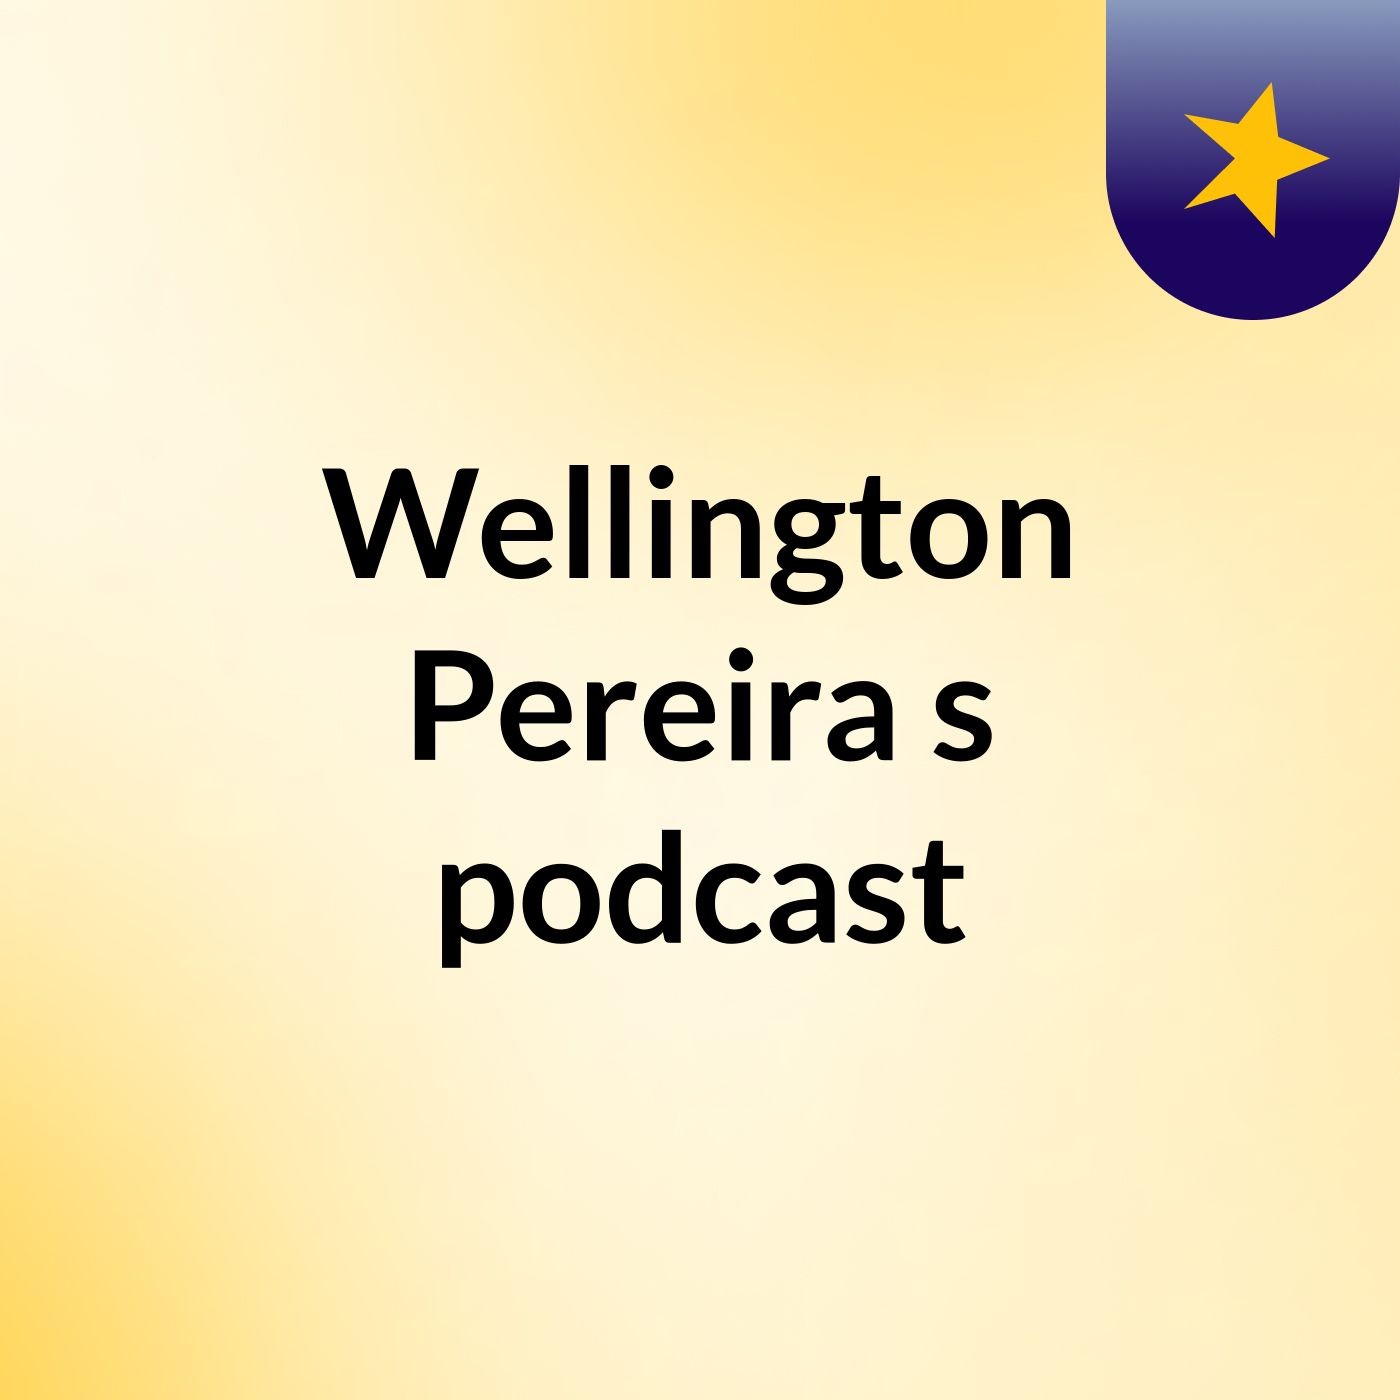 Wellington Pereira's podcast